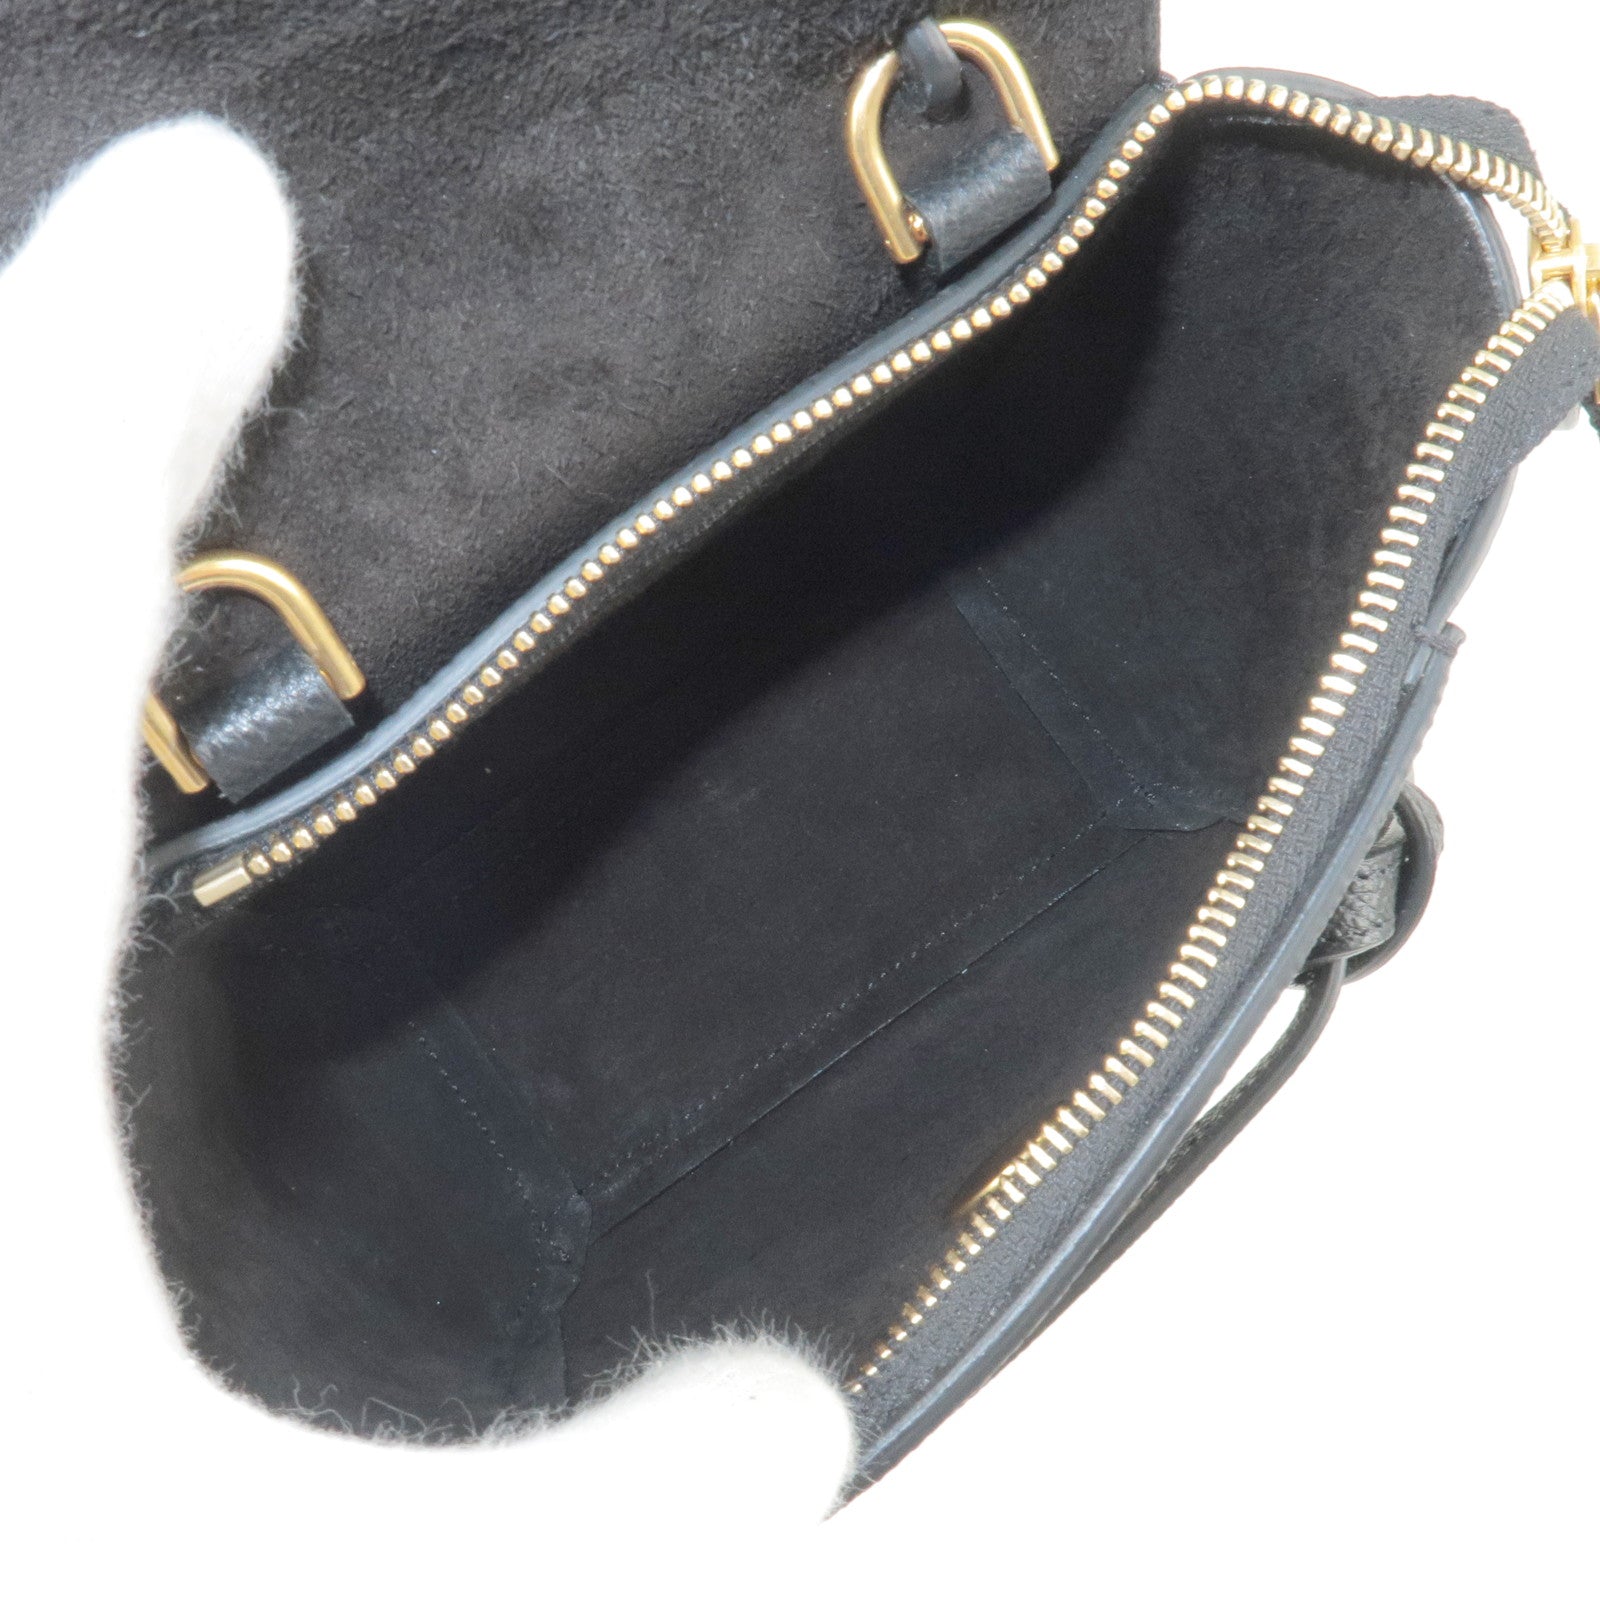 First Celine - Preloved Pico Belt : r/handbags